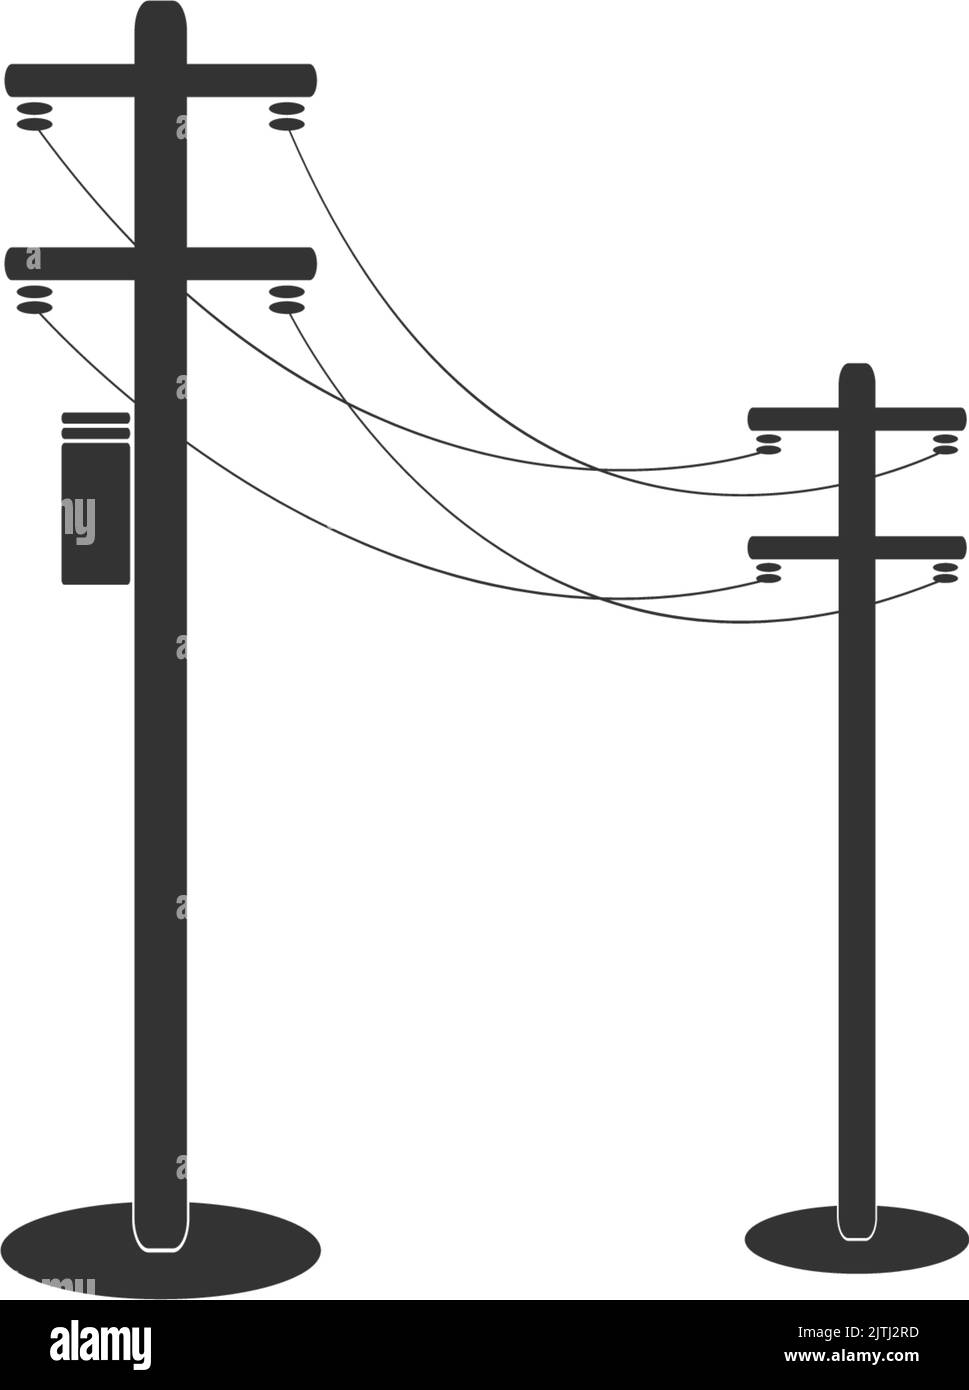 electric pole logo design vector illustration Stock Vector